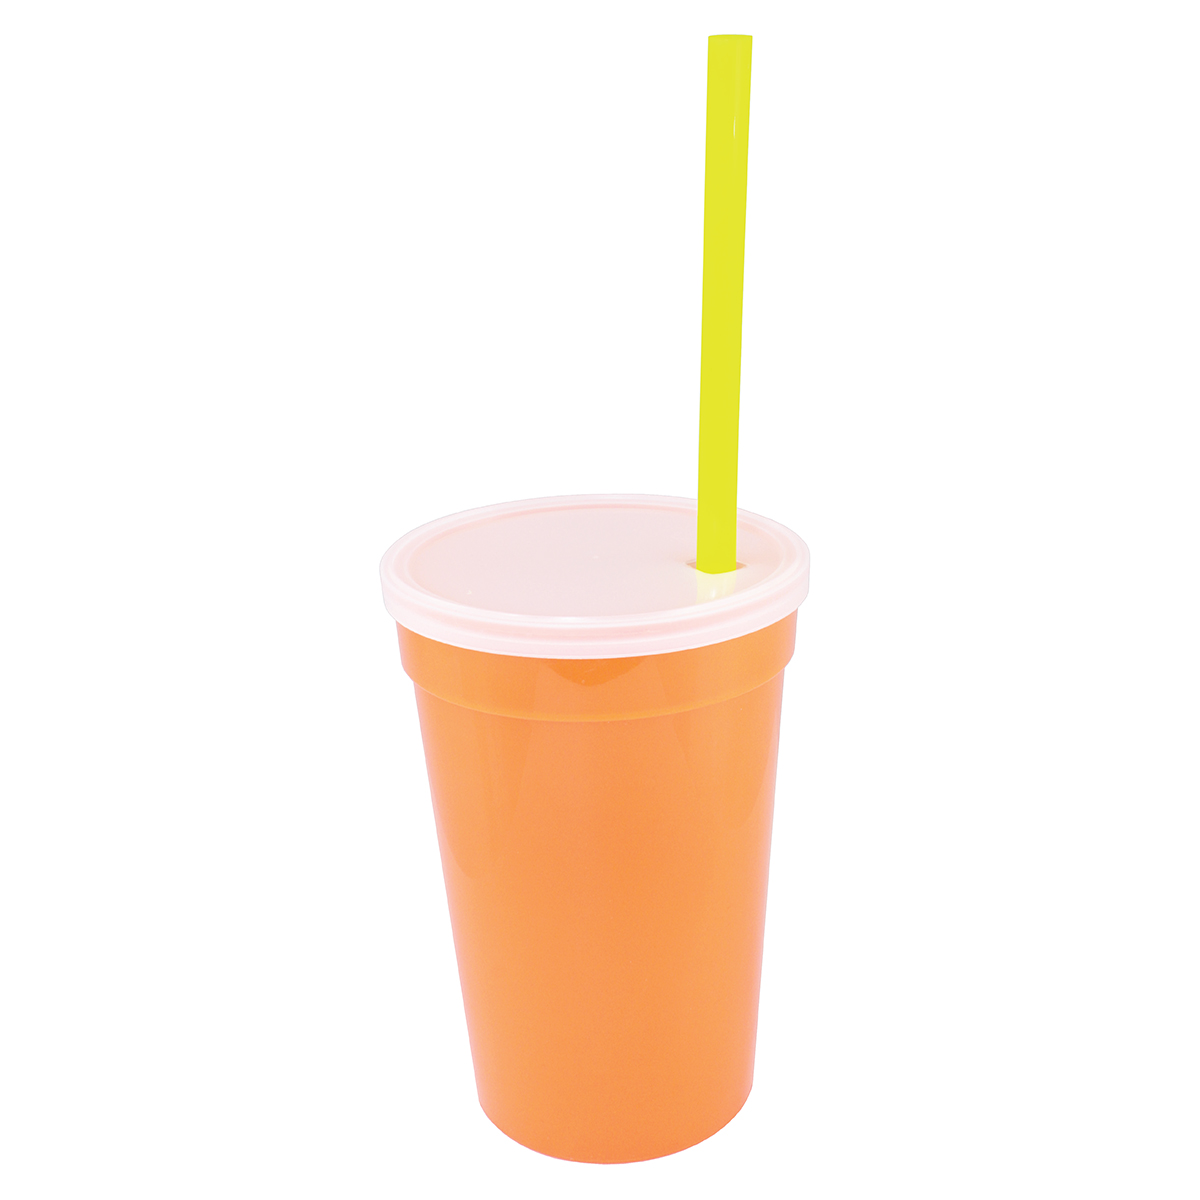 Neon Orange with yellow straw